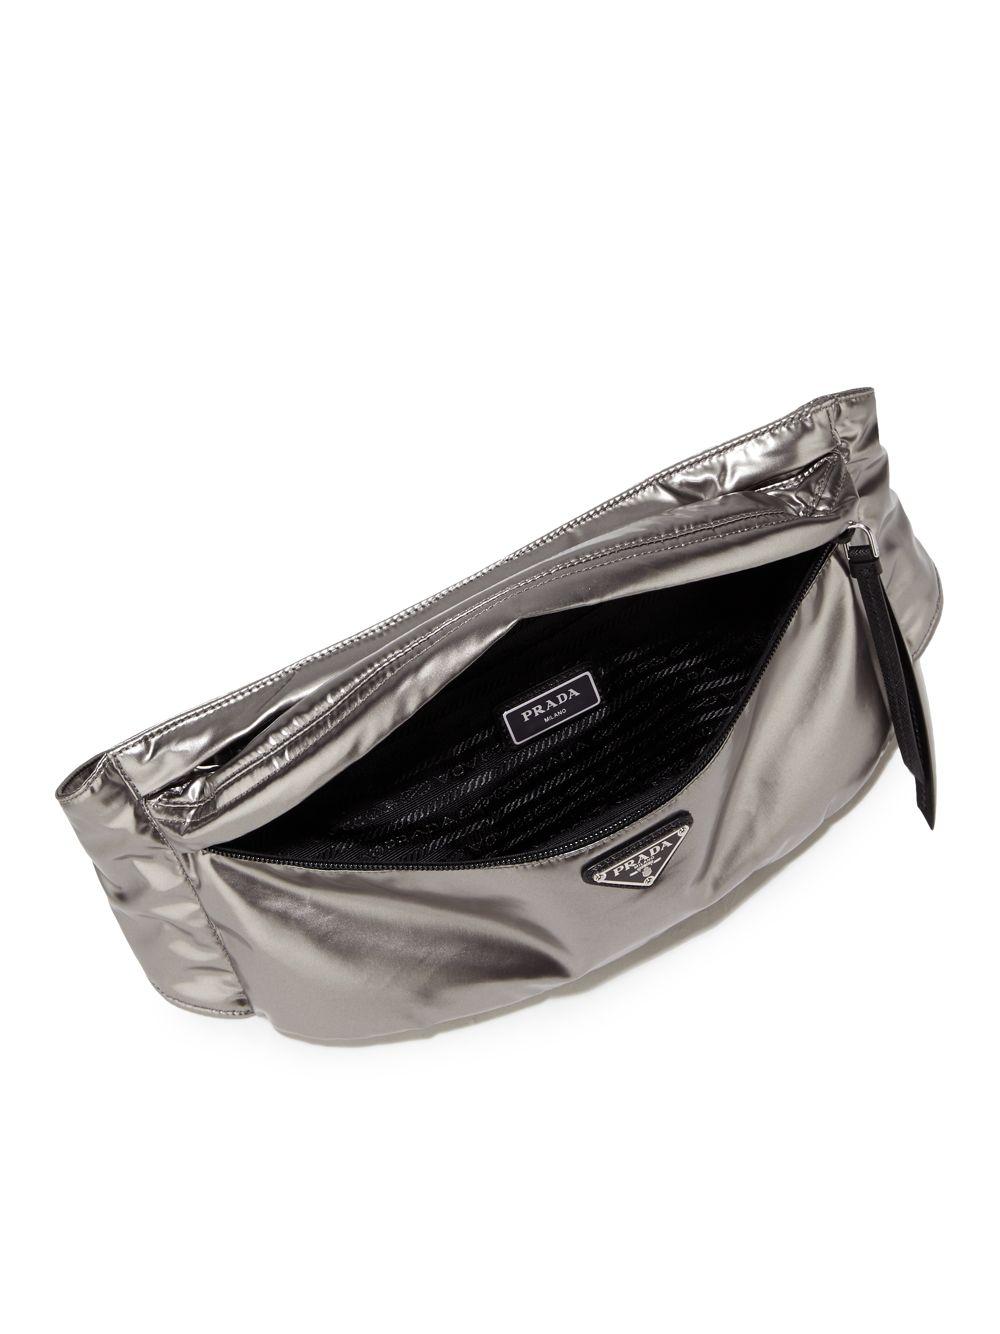 Prada Metallic Logo Belt Bag in Metallic - Lyst